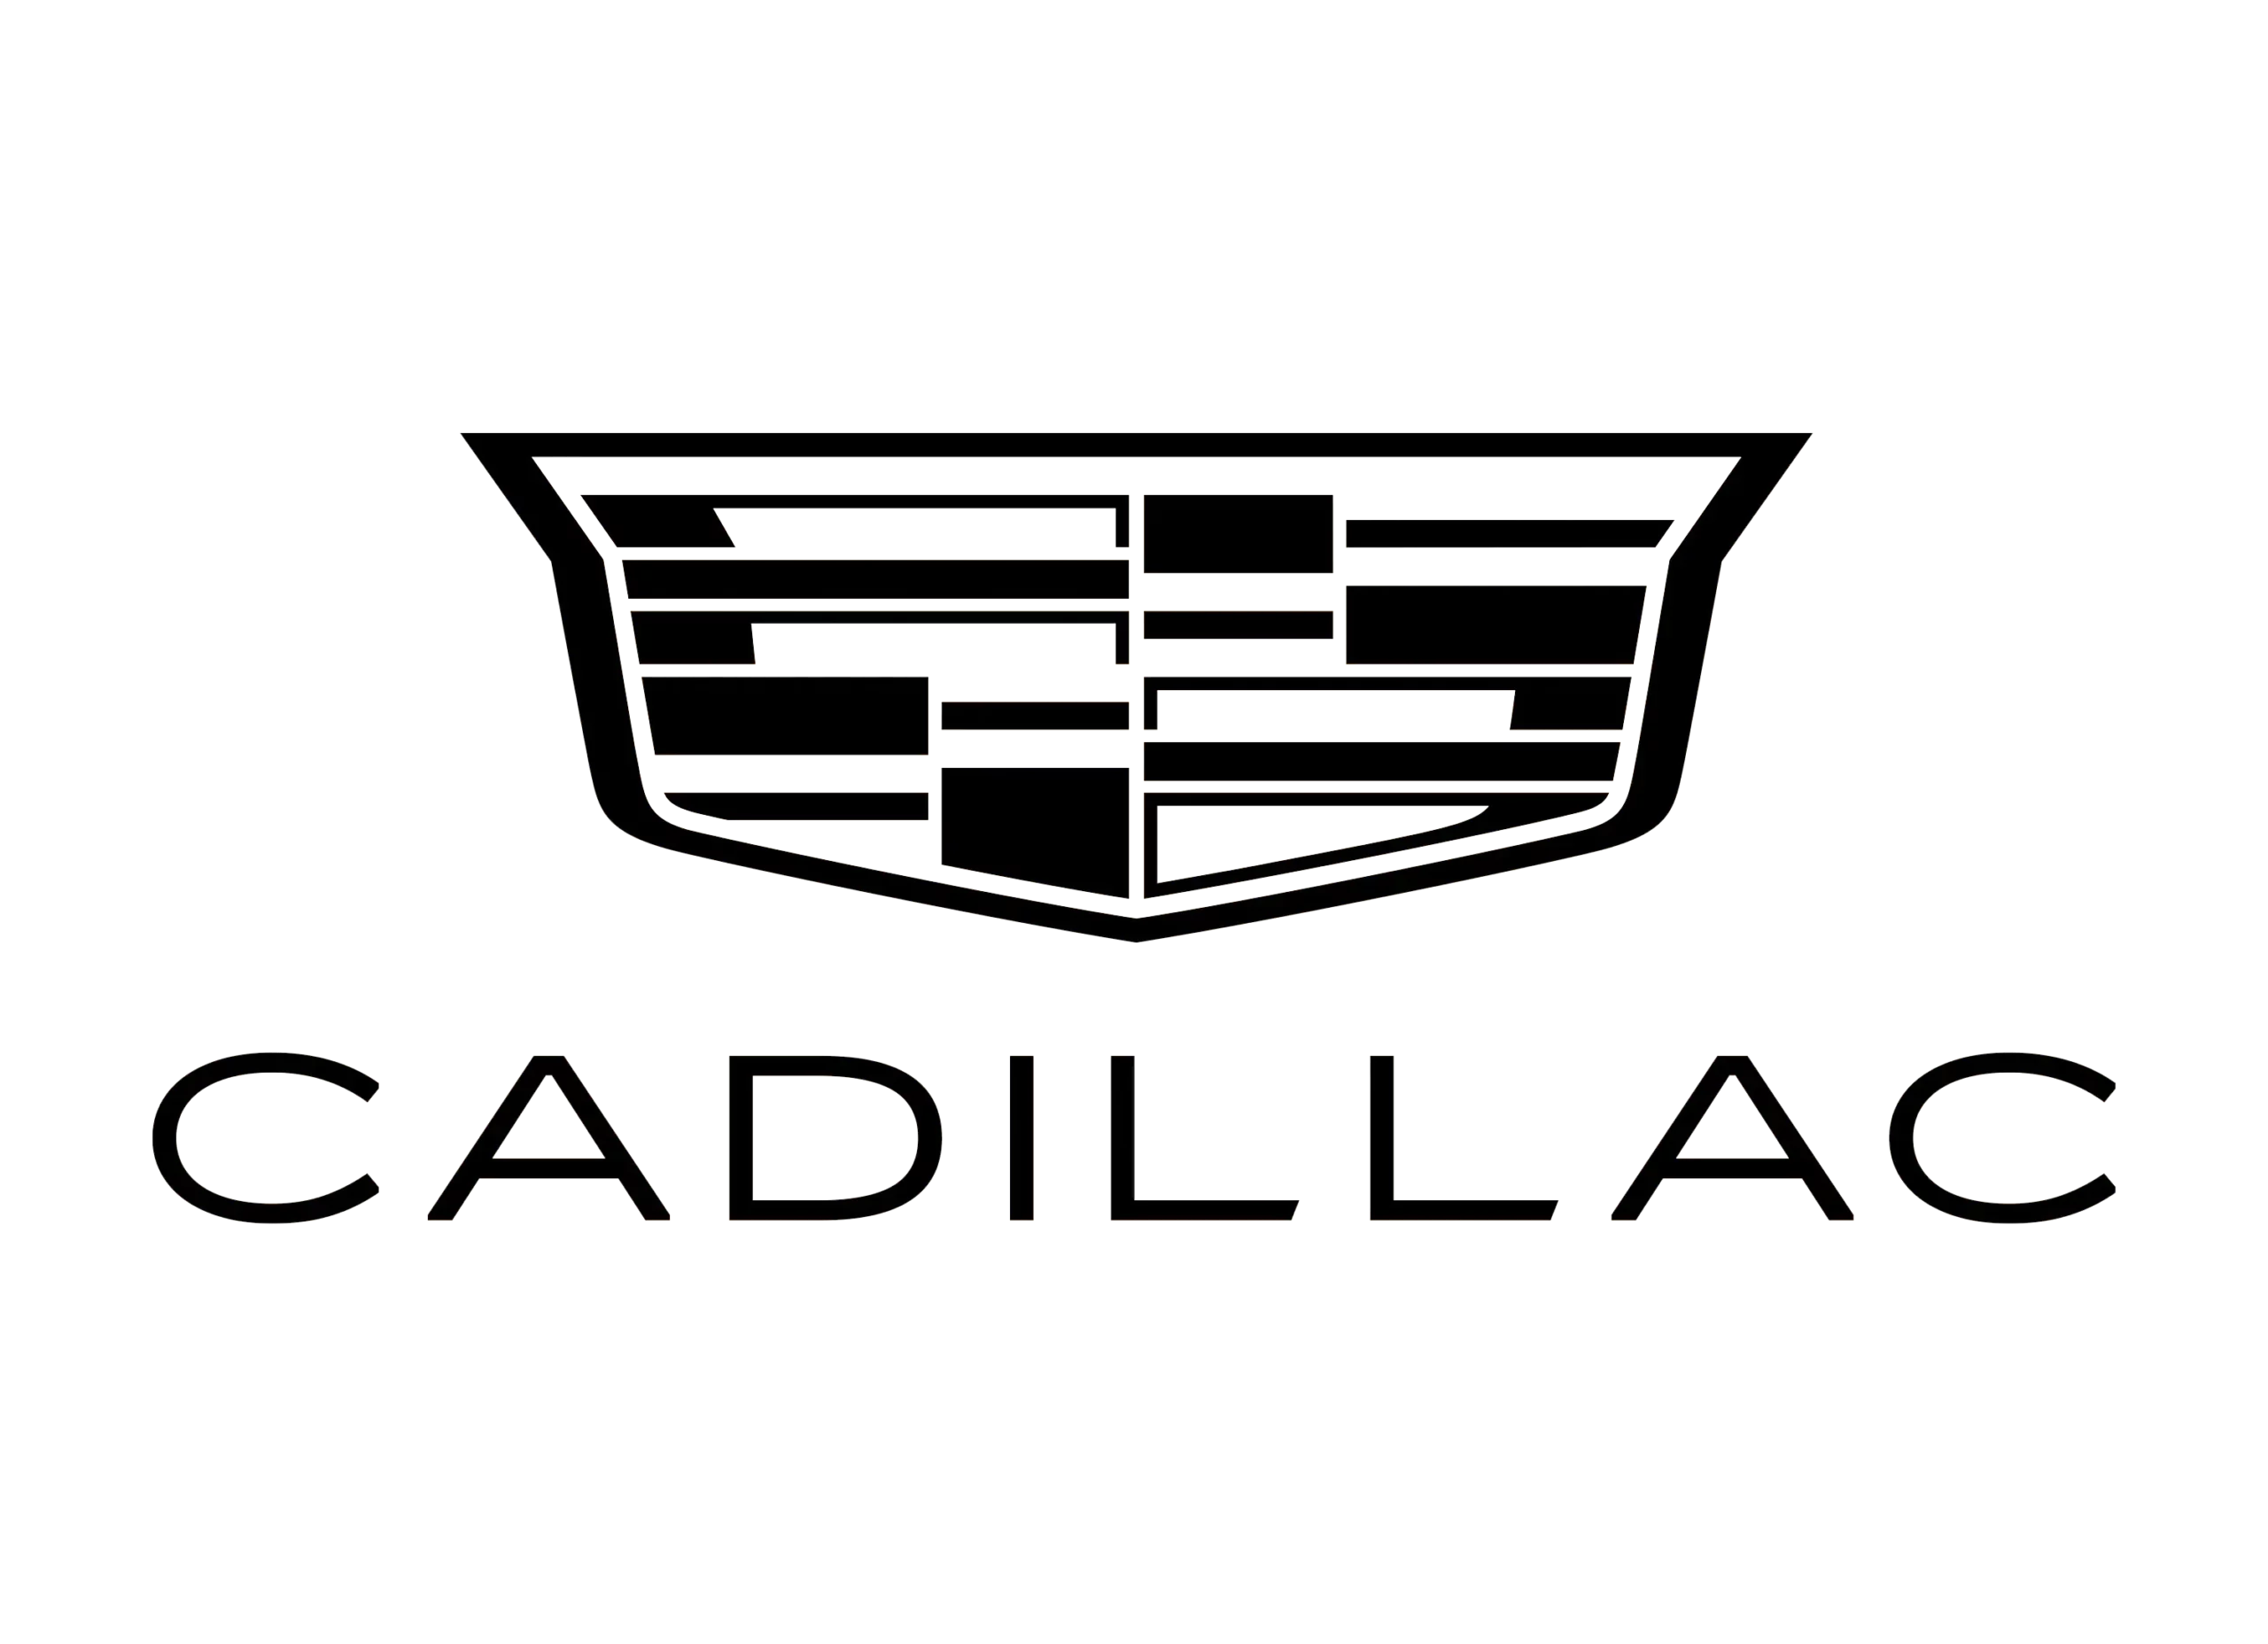 Cadillac logo 2021-present